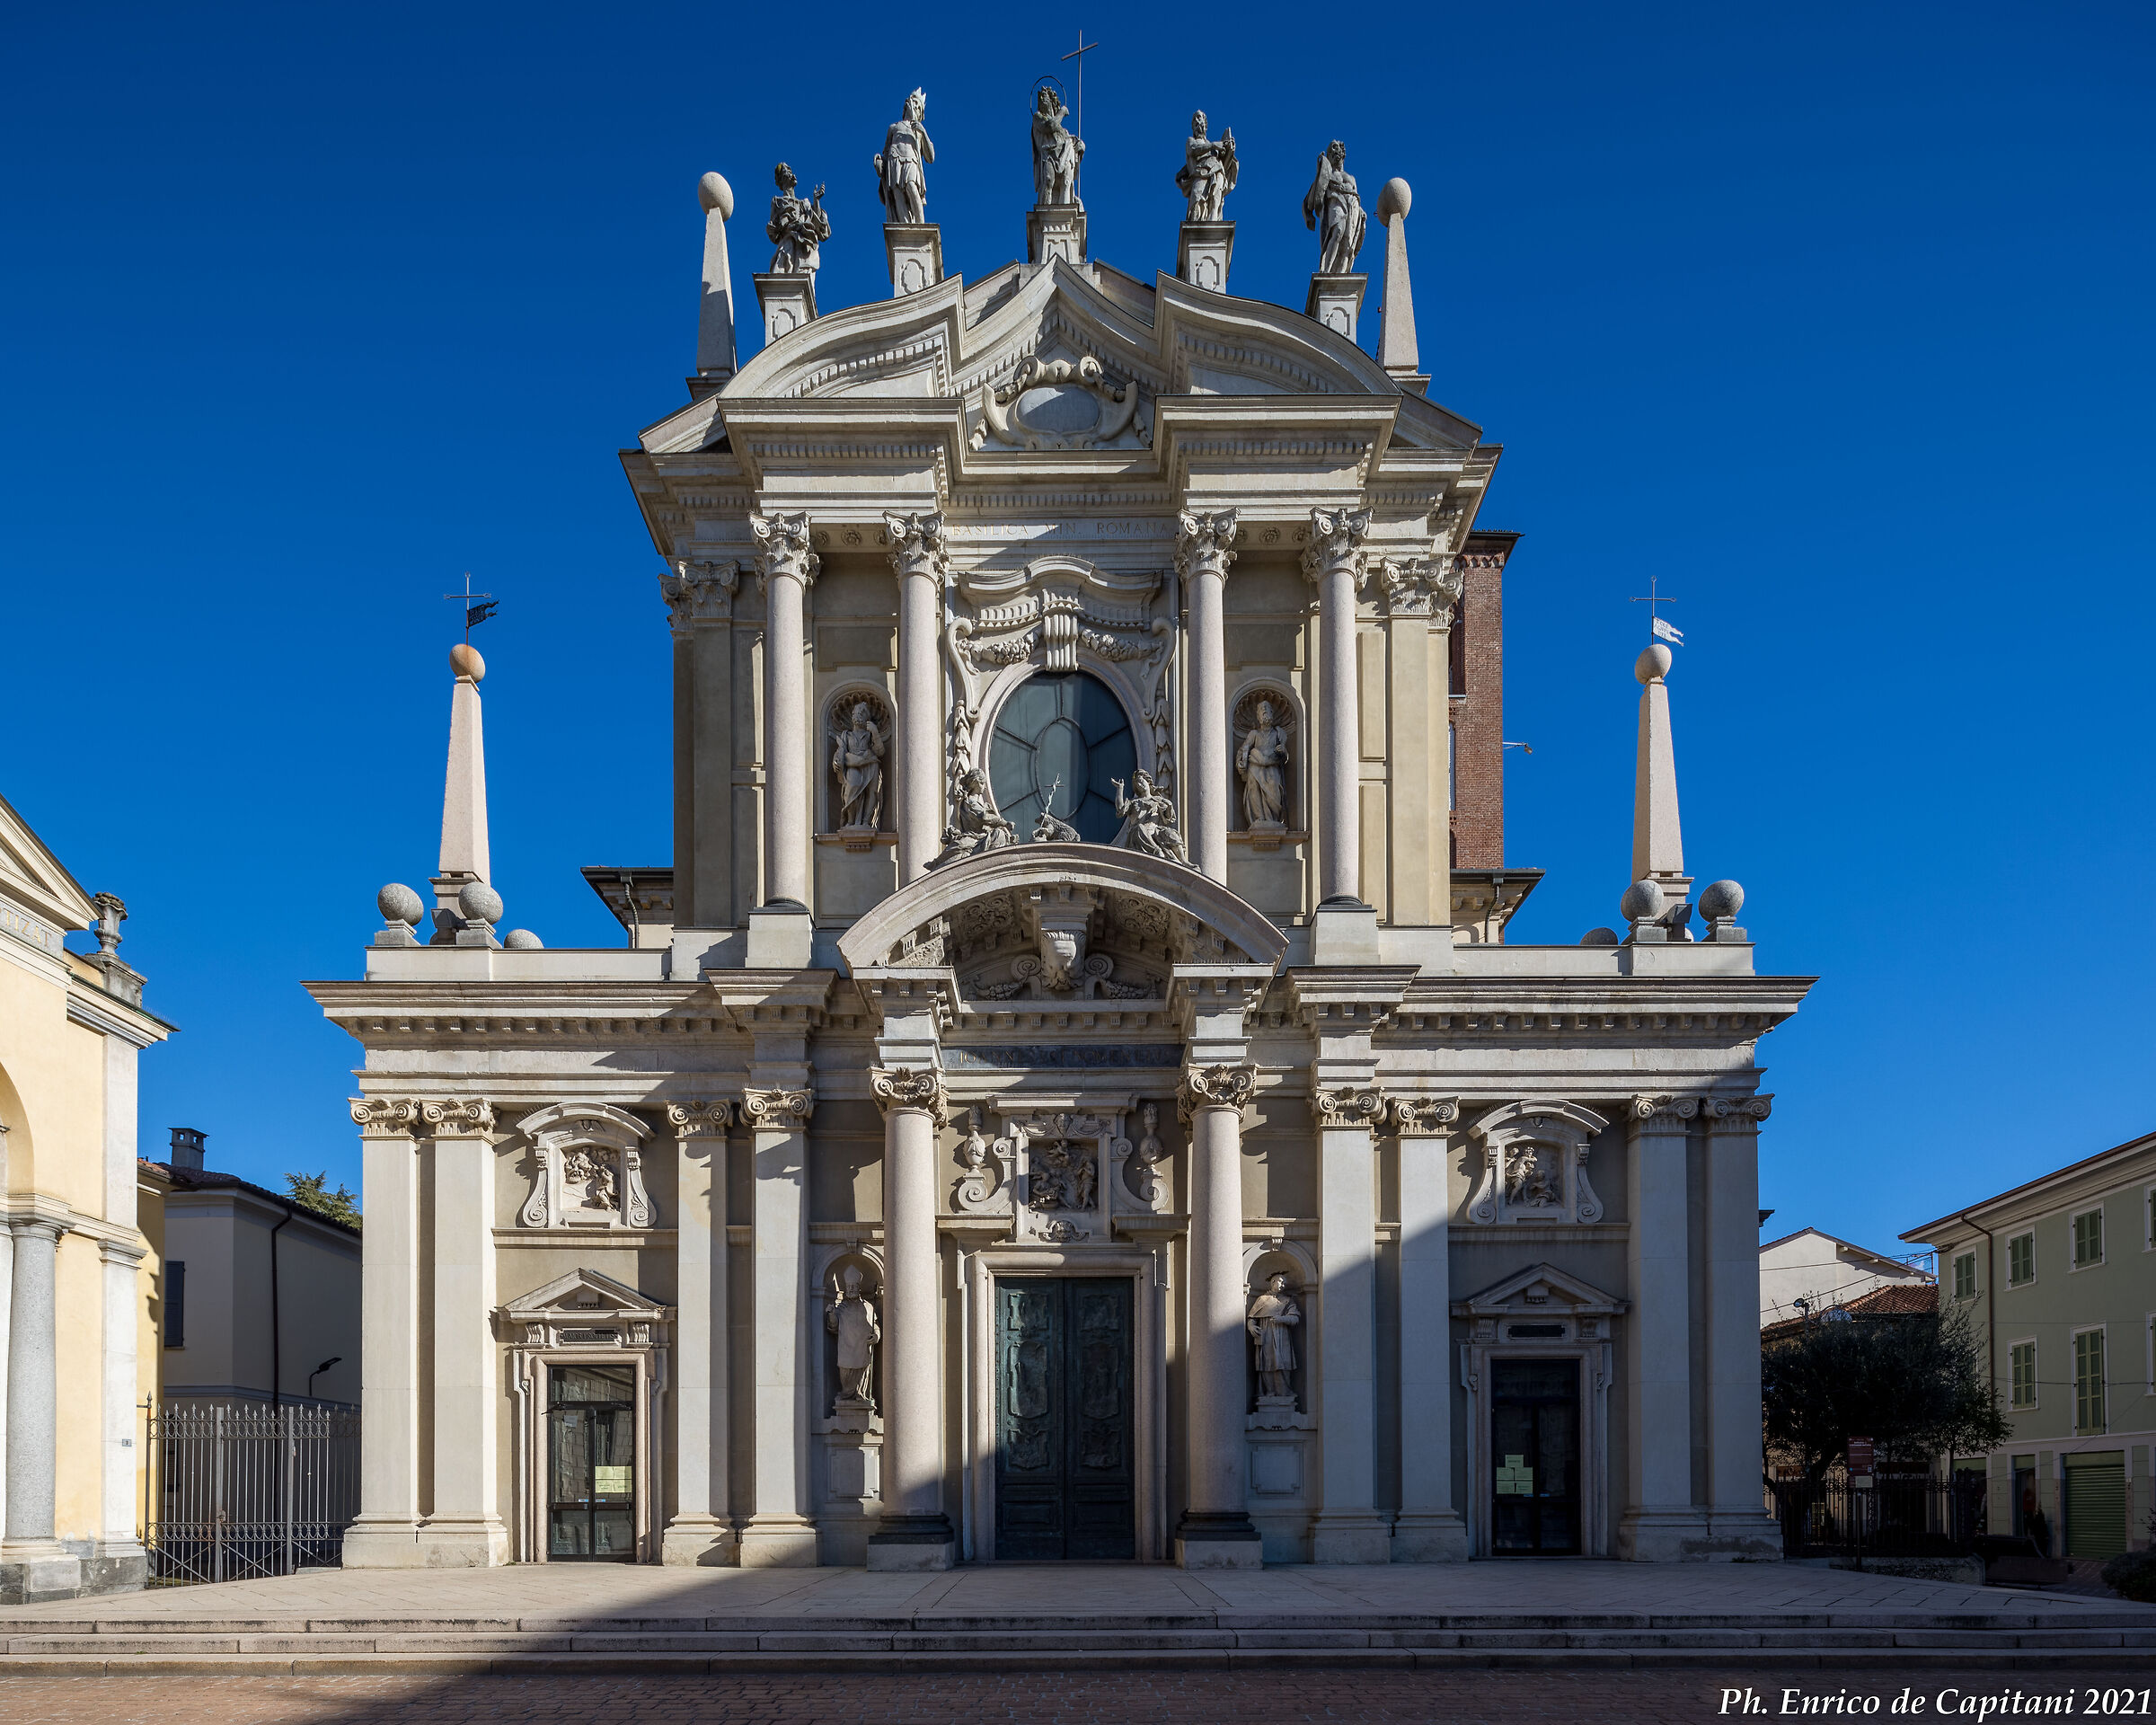 The façade of St. John the Baptist in Busto Arsizio...